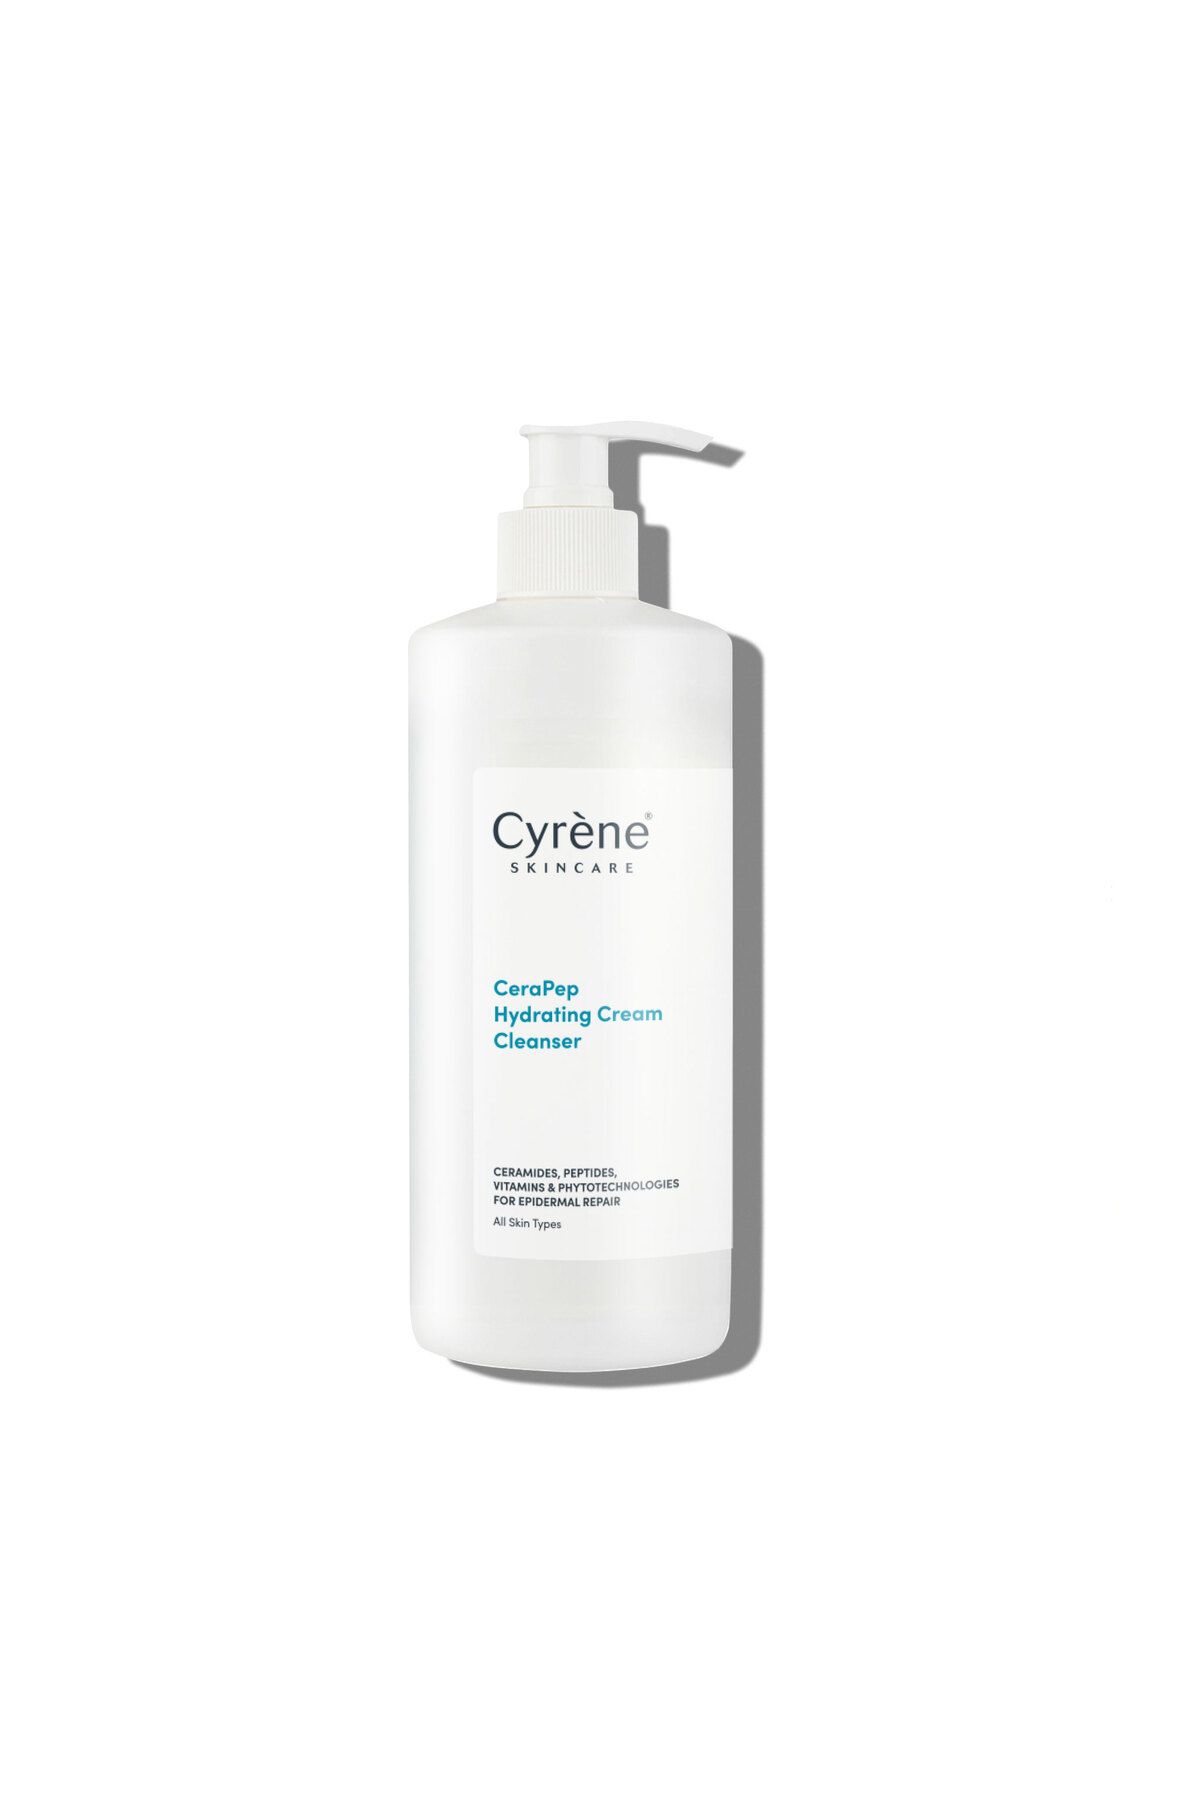 Cyrene CeraPep Hydrating Cream Cleanser